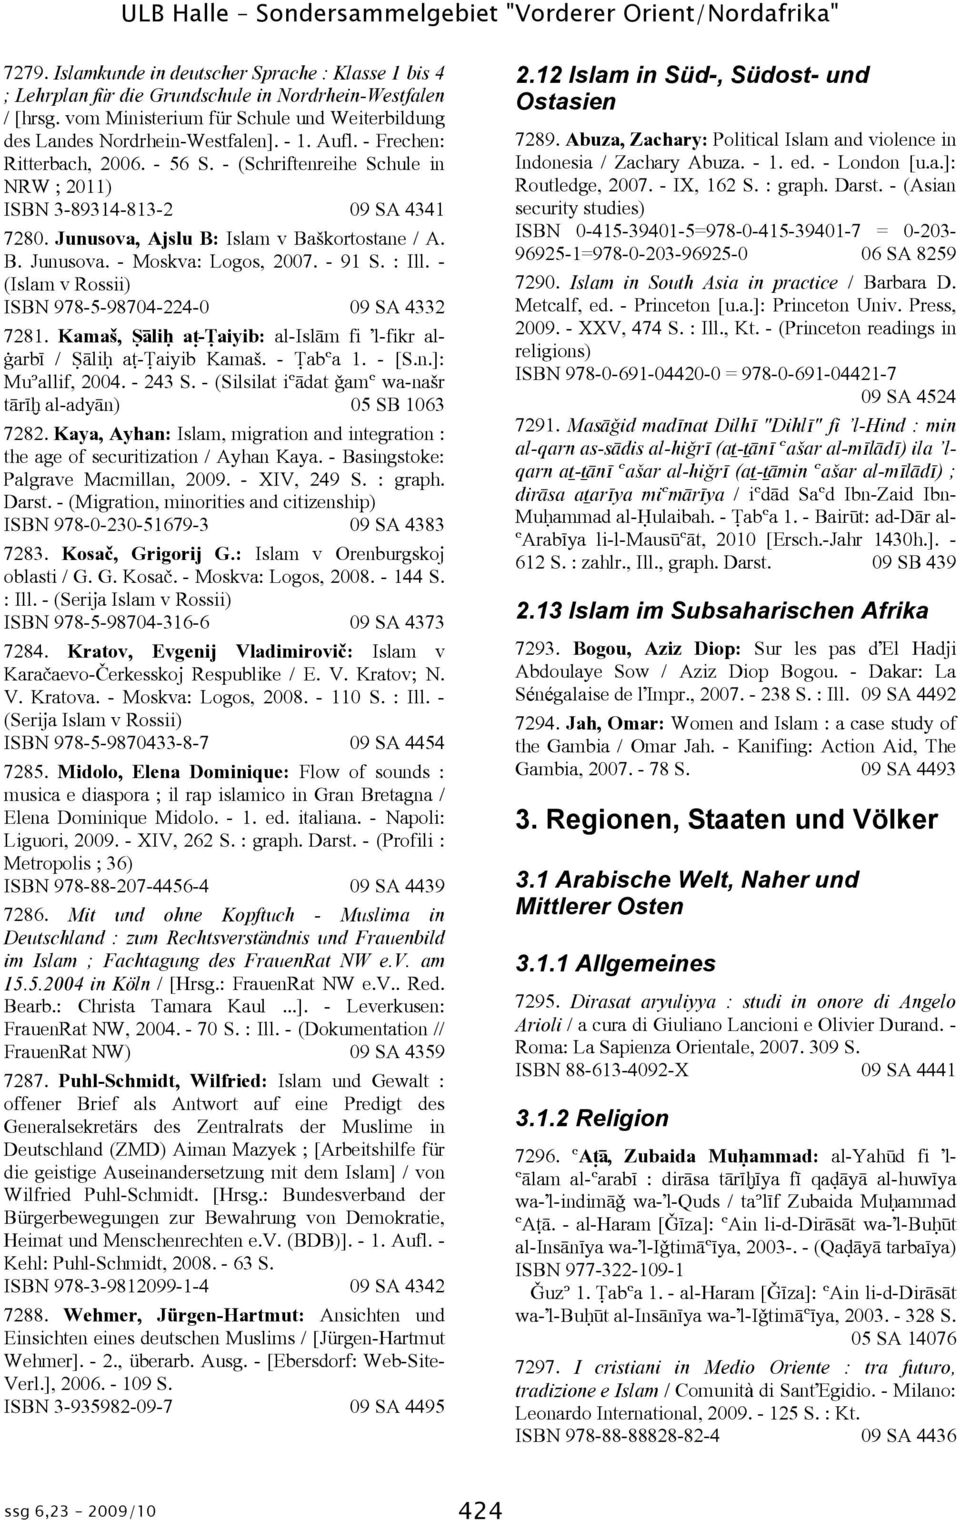 - (Schriftenreihe Schule in NRW ; 2011) ISBN 3-89314-813-2 09 SA 4341 7280. Junusova, Ajslu B: Islam v Baškortostane / A. B. Junusova. - Moskva: Logos, 2007. - 91 S. : Ill.